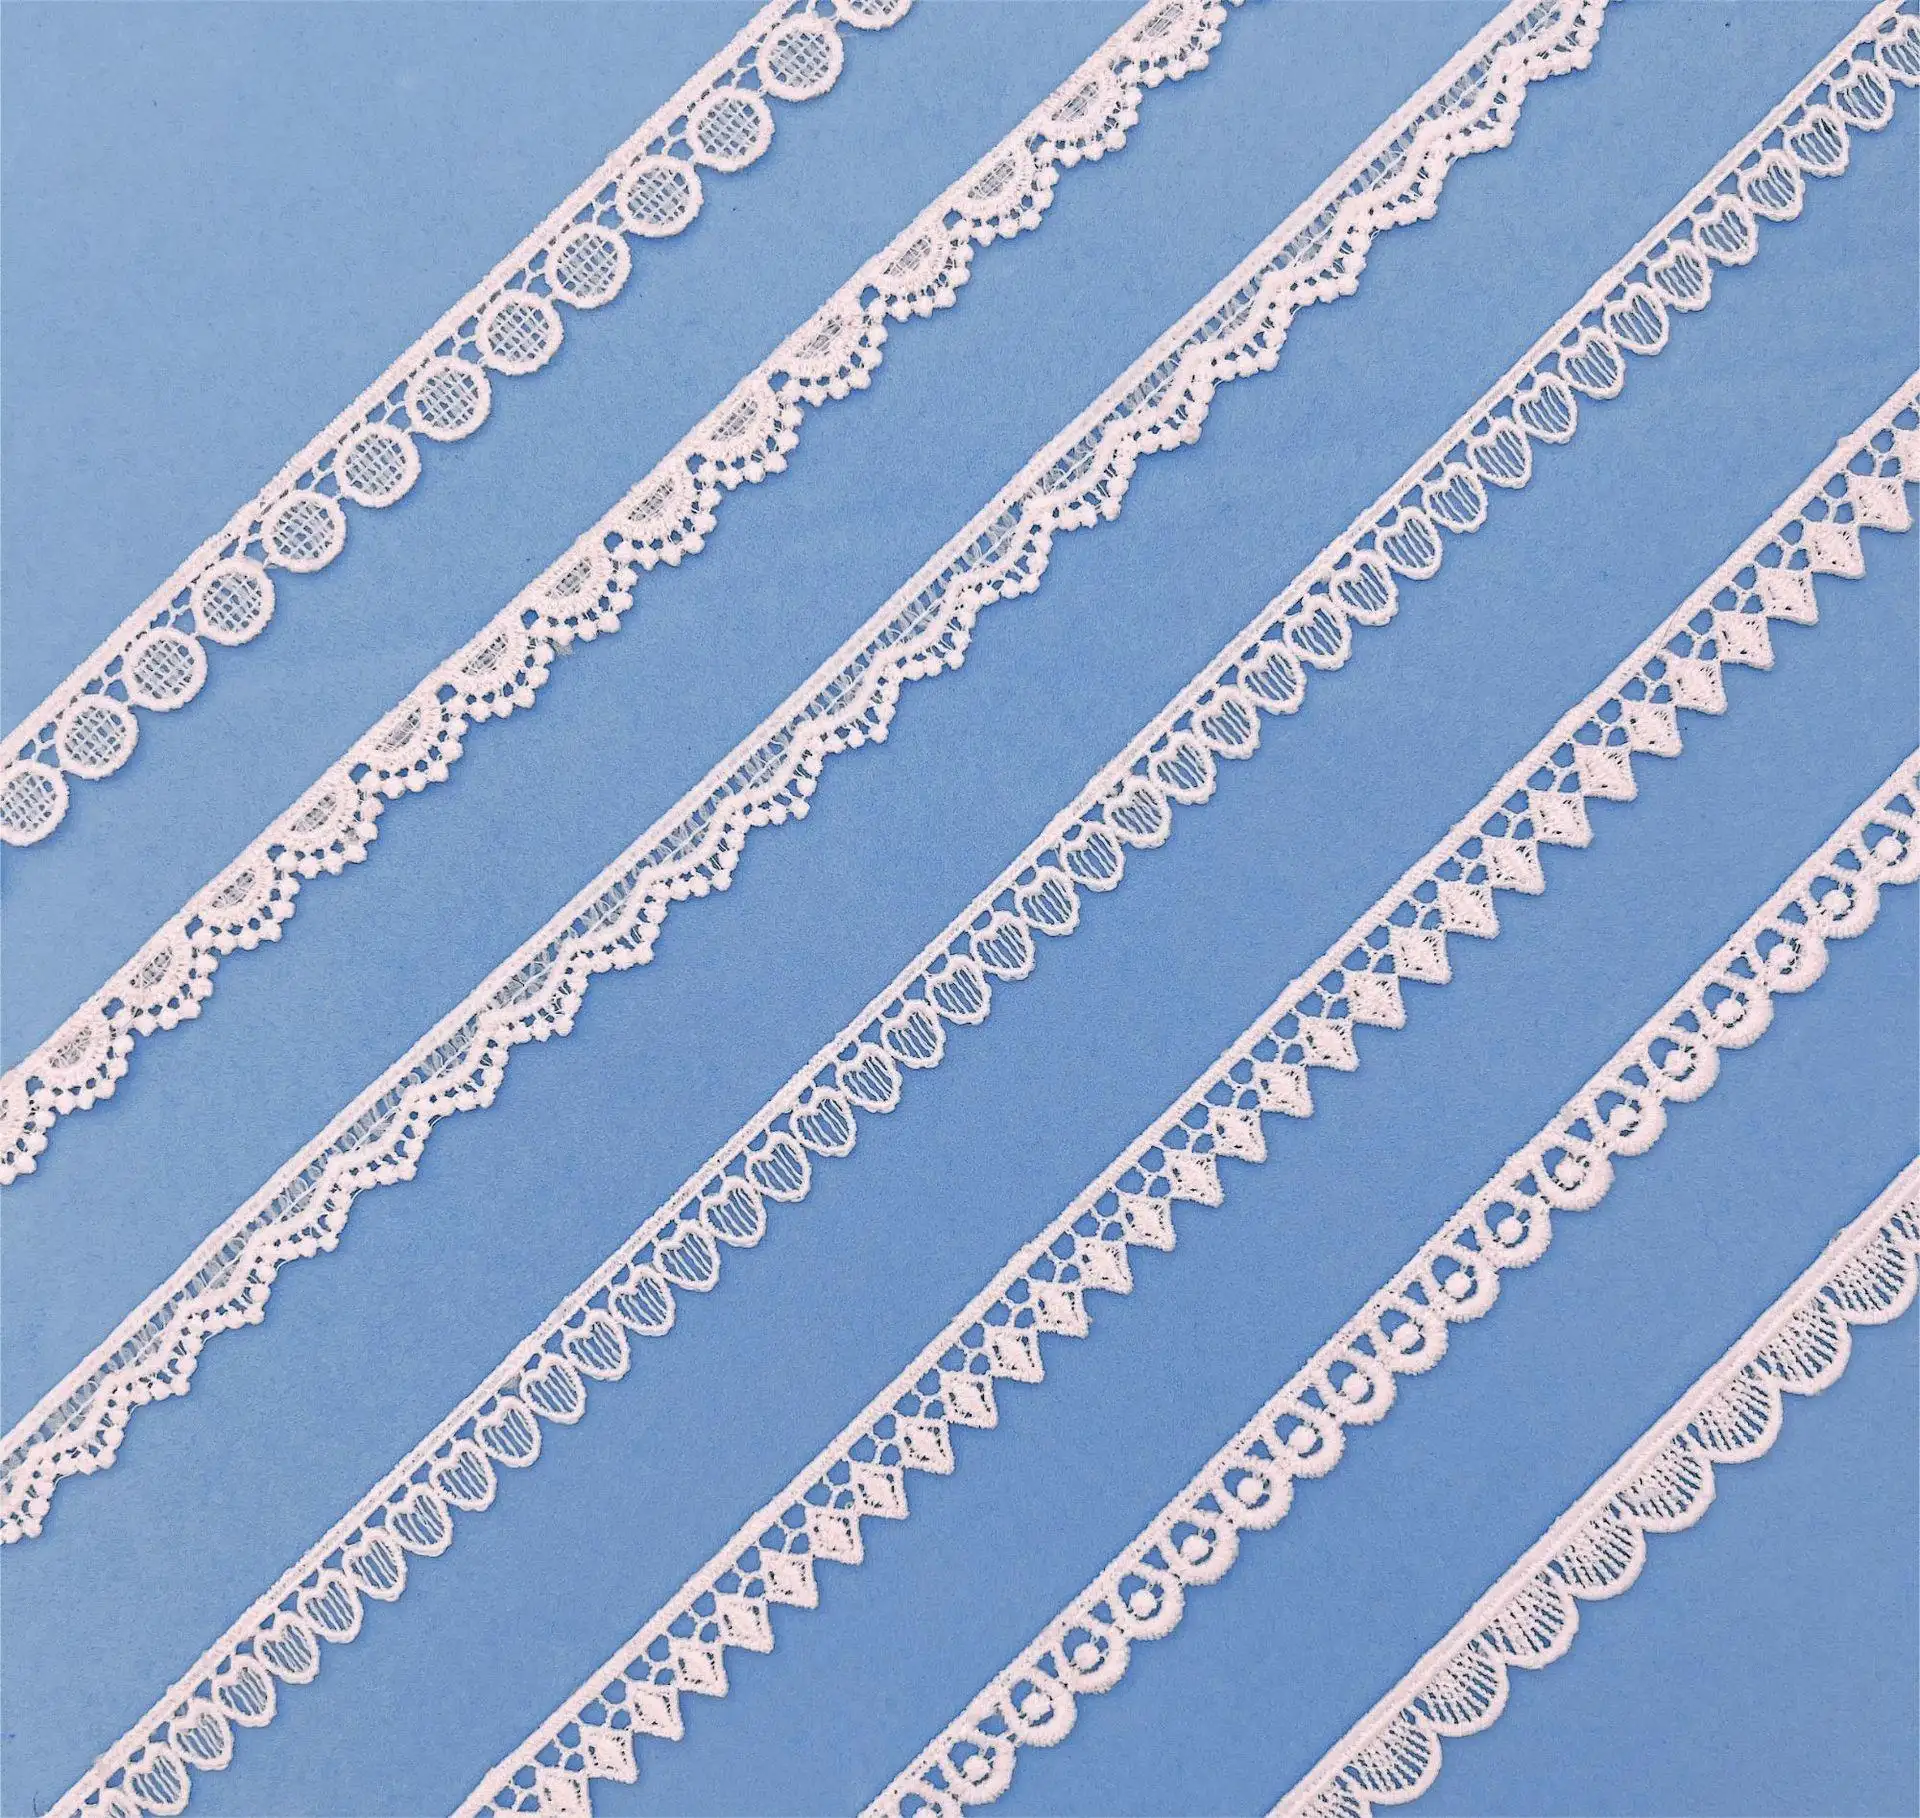 Embroidery lace trim Border water soluble milk fiber lace trim for Lingerie guipure Decorative lace trim for garment